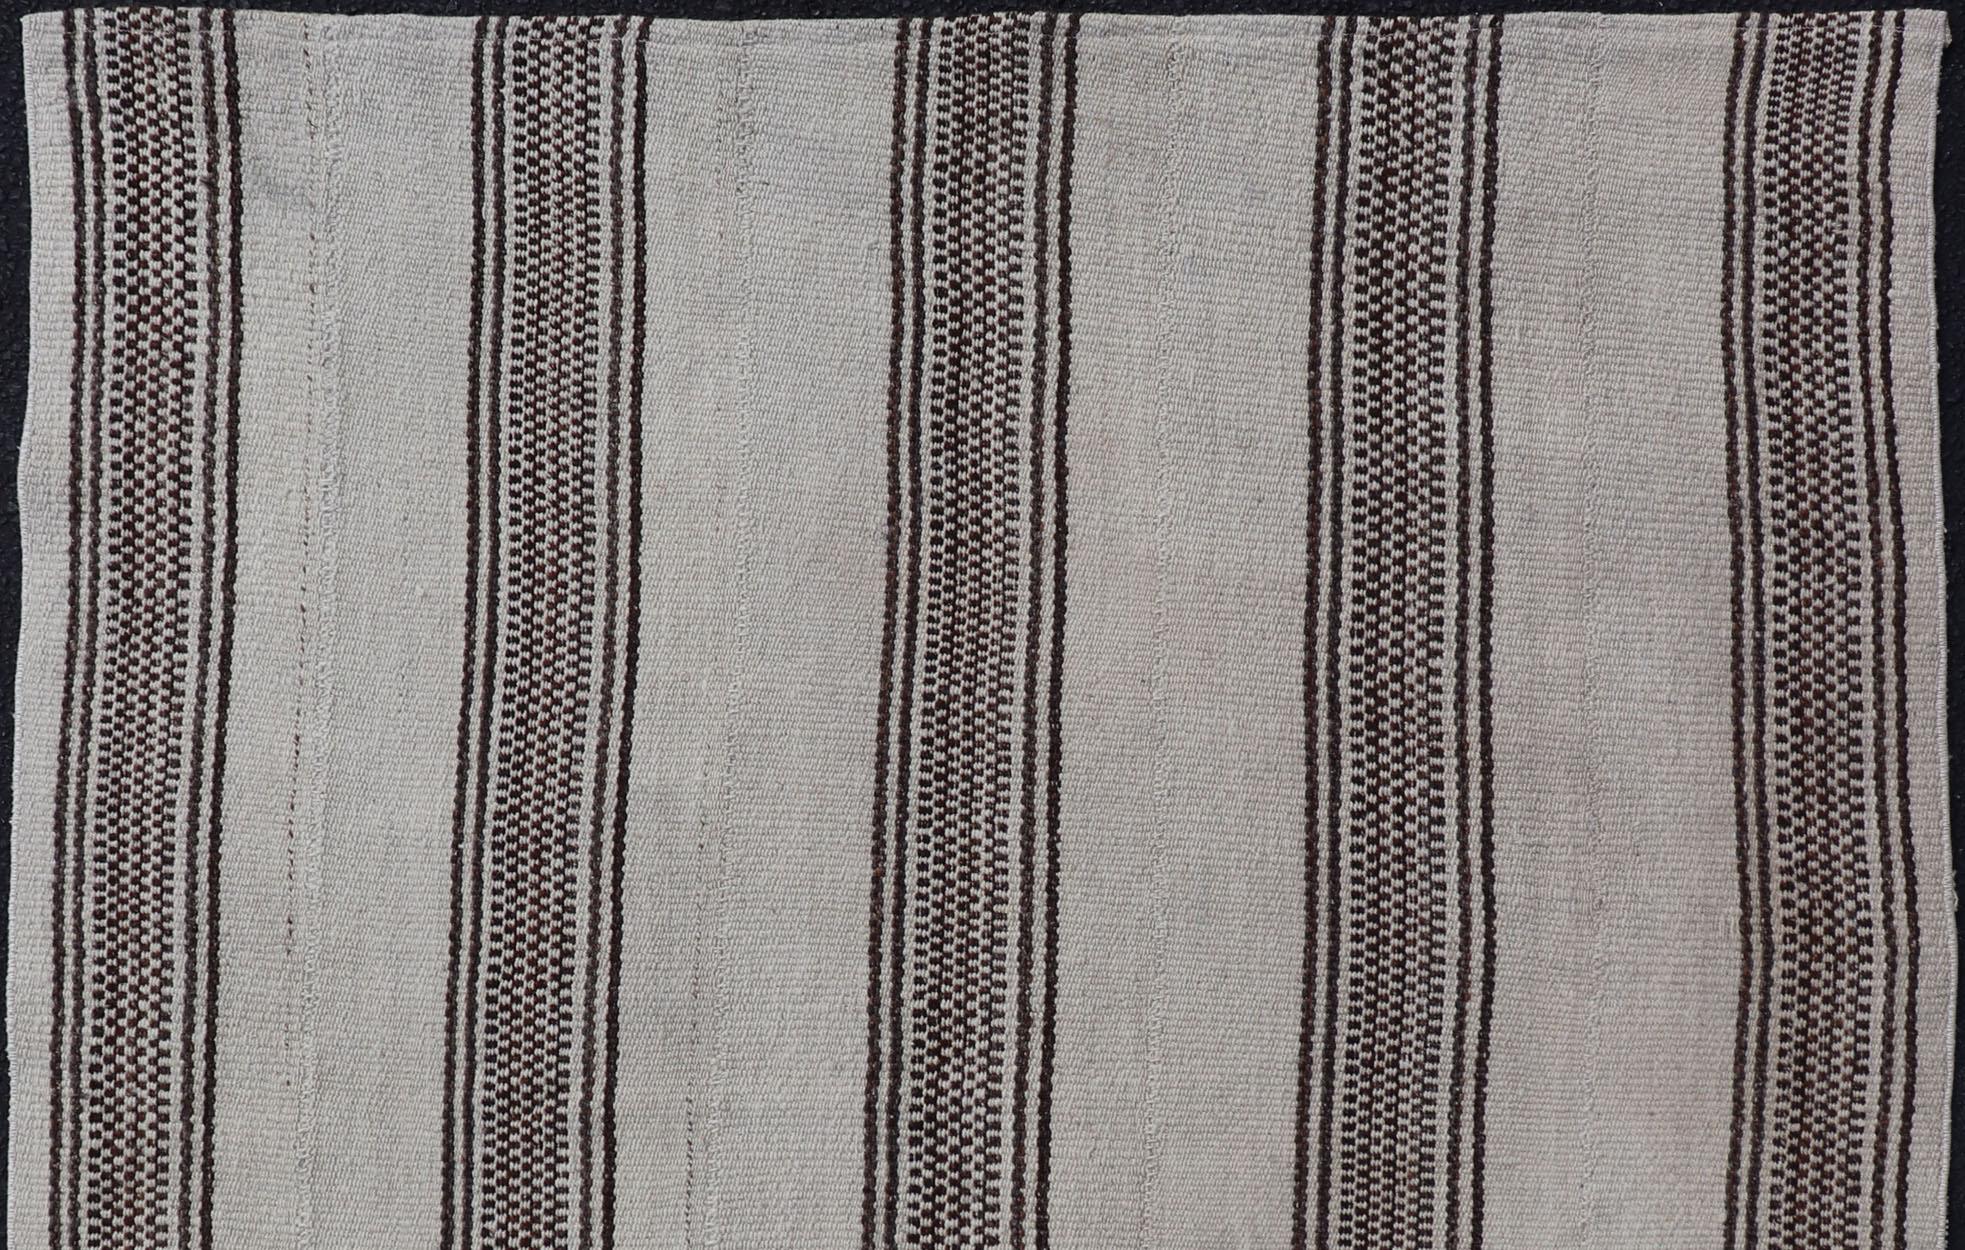 Measures: 4'4 x 4'7 
Vintage Flat Weave Turkish Kilim with Stripes in Ivory and Brown. Keivan Woven Arts / rug EN-15164, country of origin / type: Turkey / Kilim, circa Mid-20th Century.

This vintage flat-woven Kilim features a minimalist design